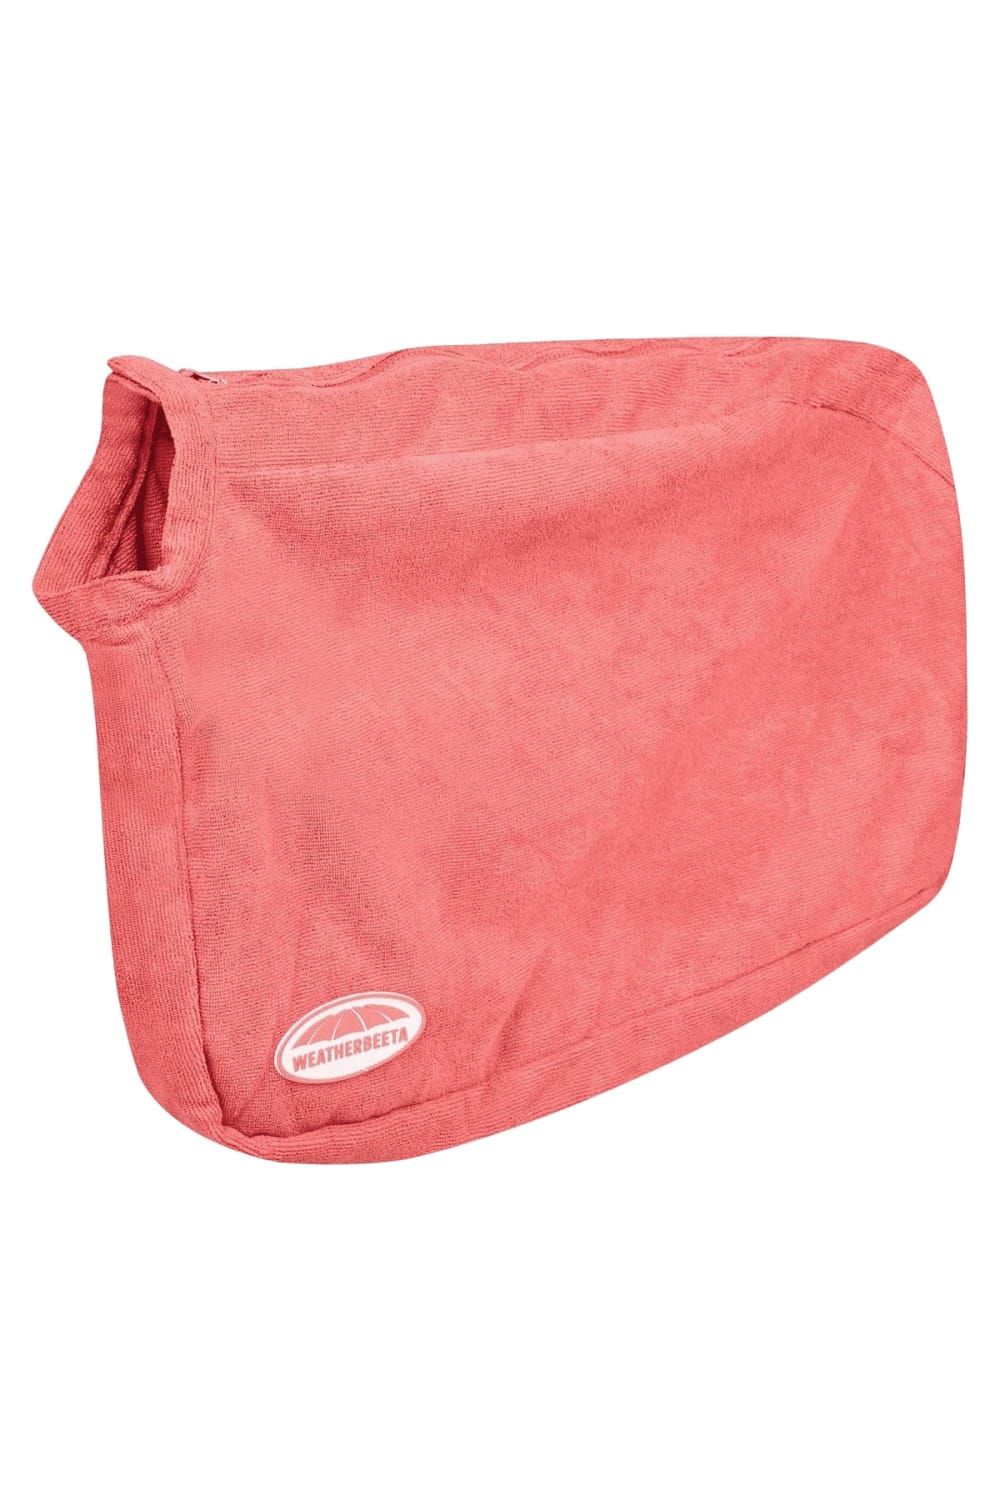 Weatherbeeta Dry-dog Bag (Red) (2XS)